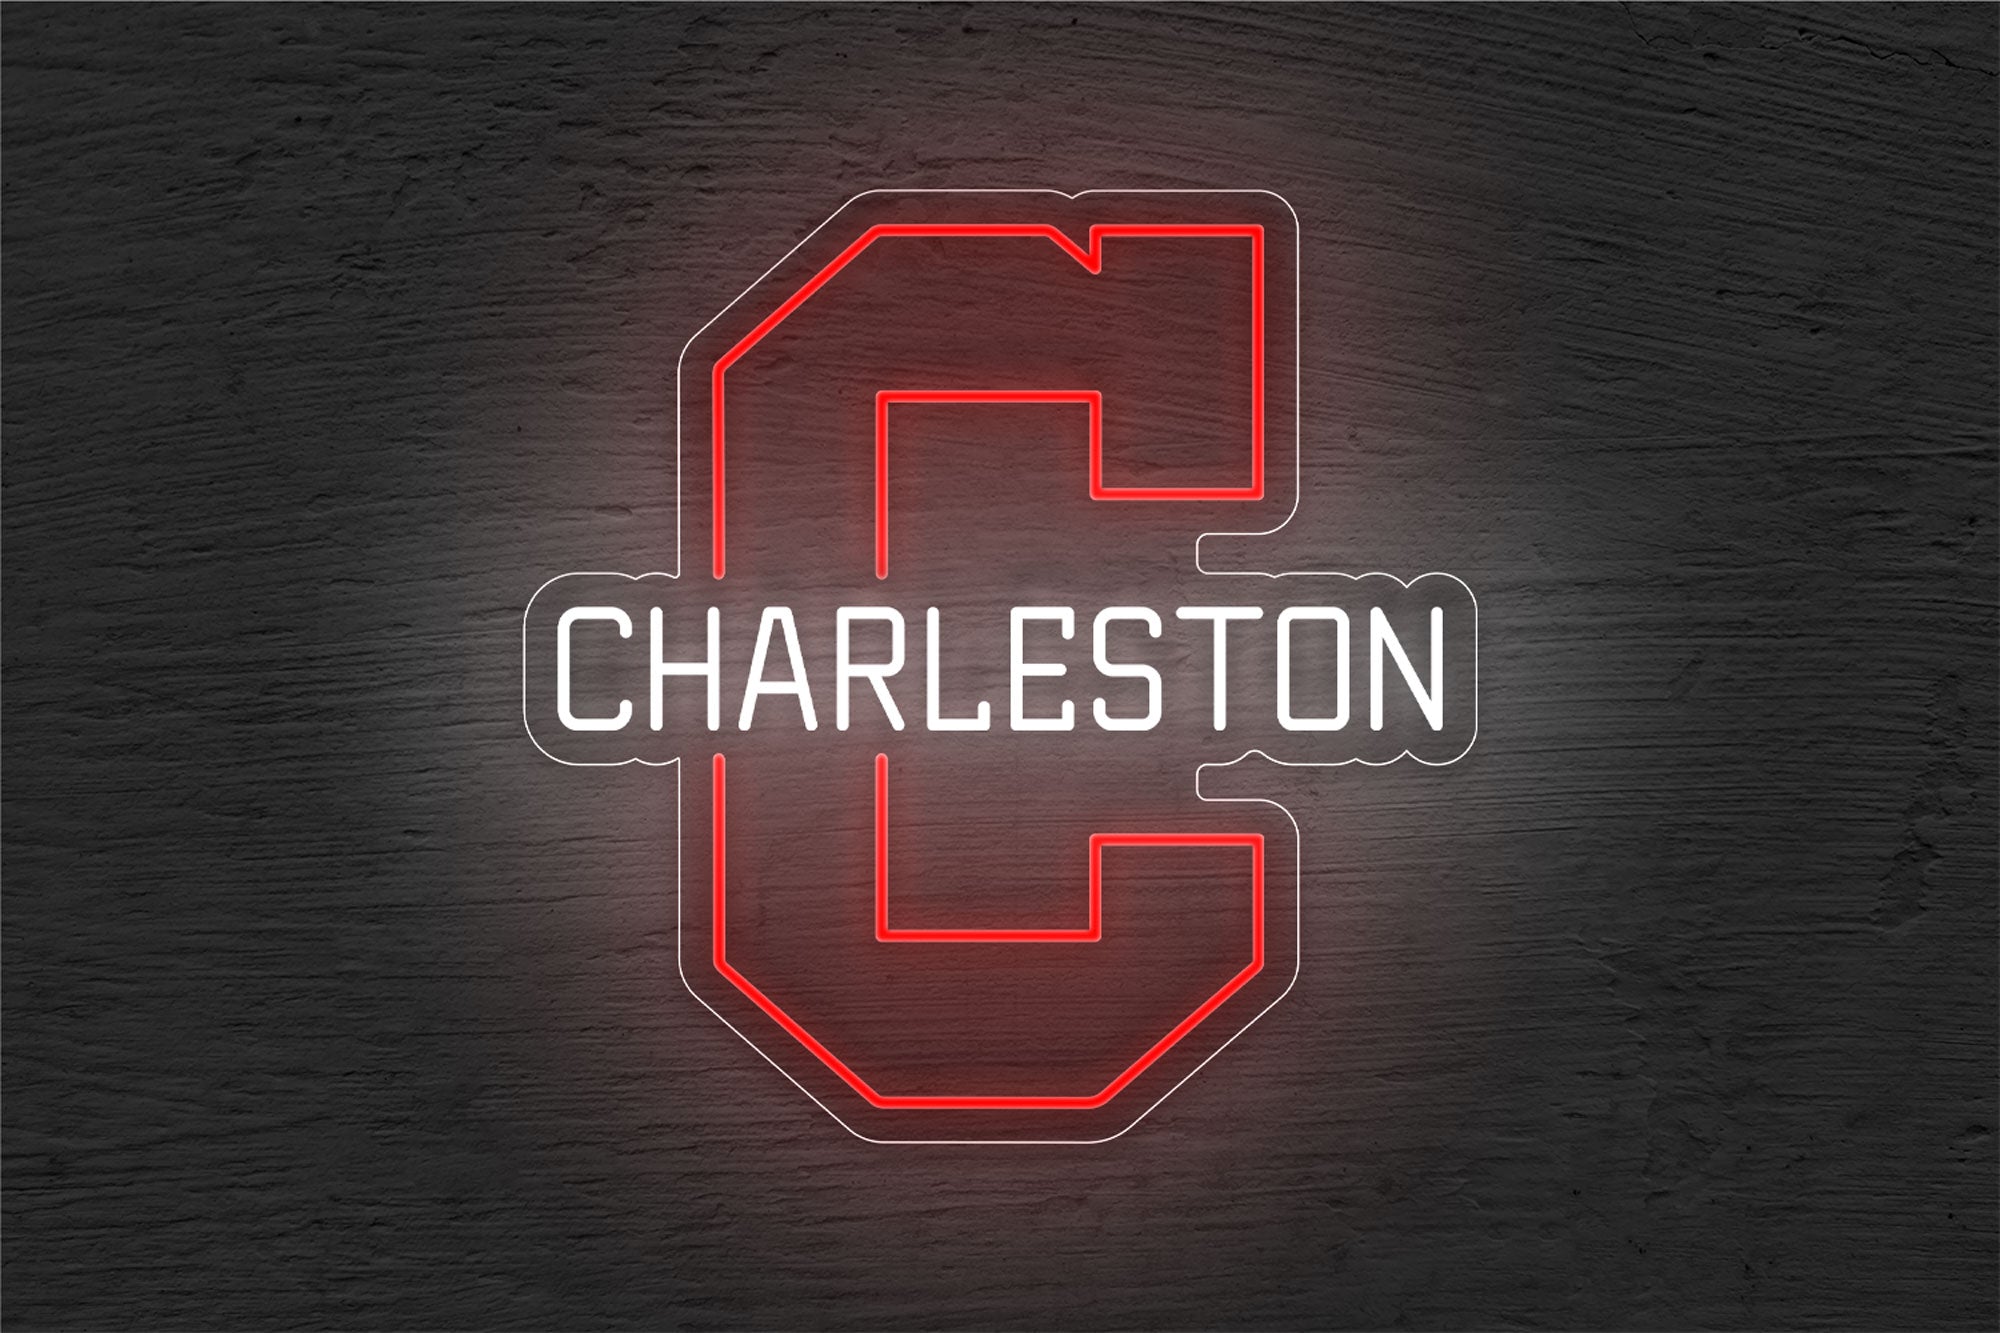 Charleston Cougars Men's Basketball LED Neon Sign